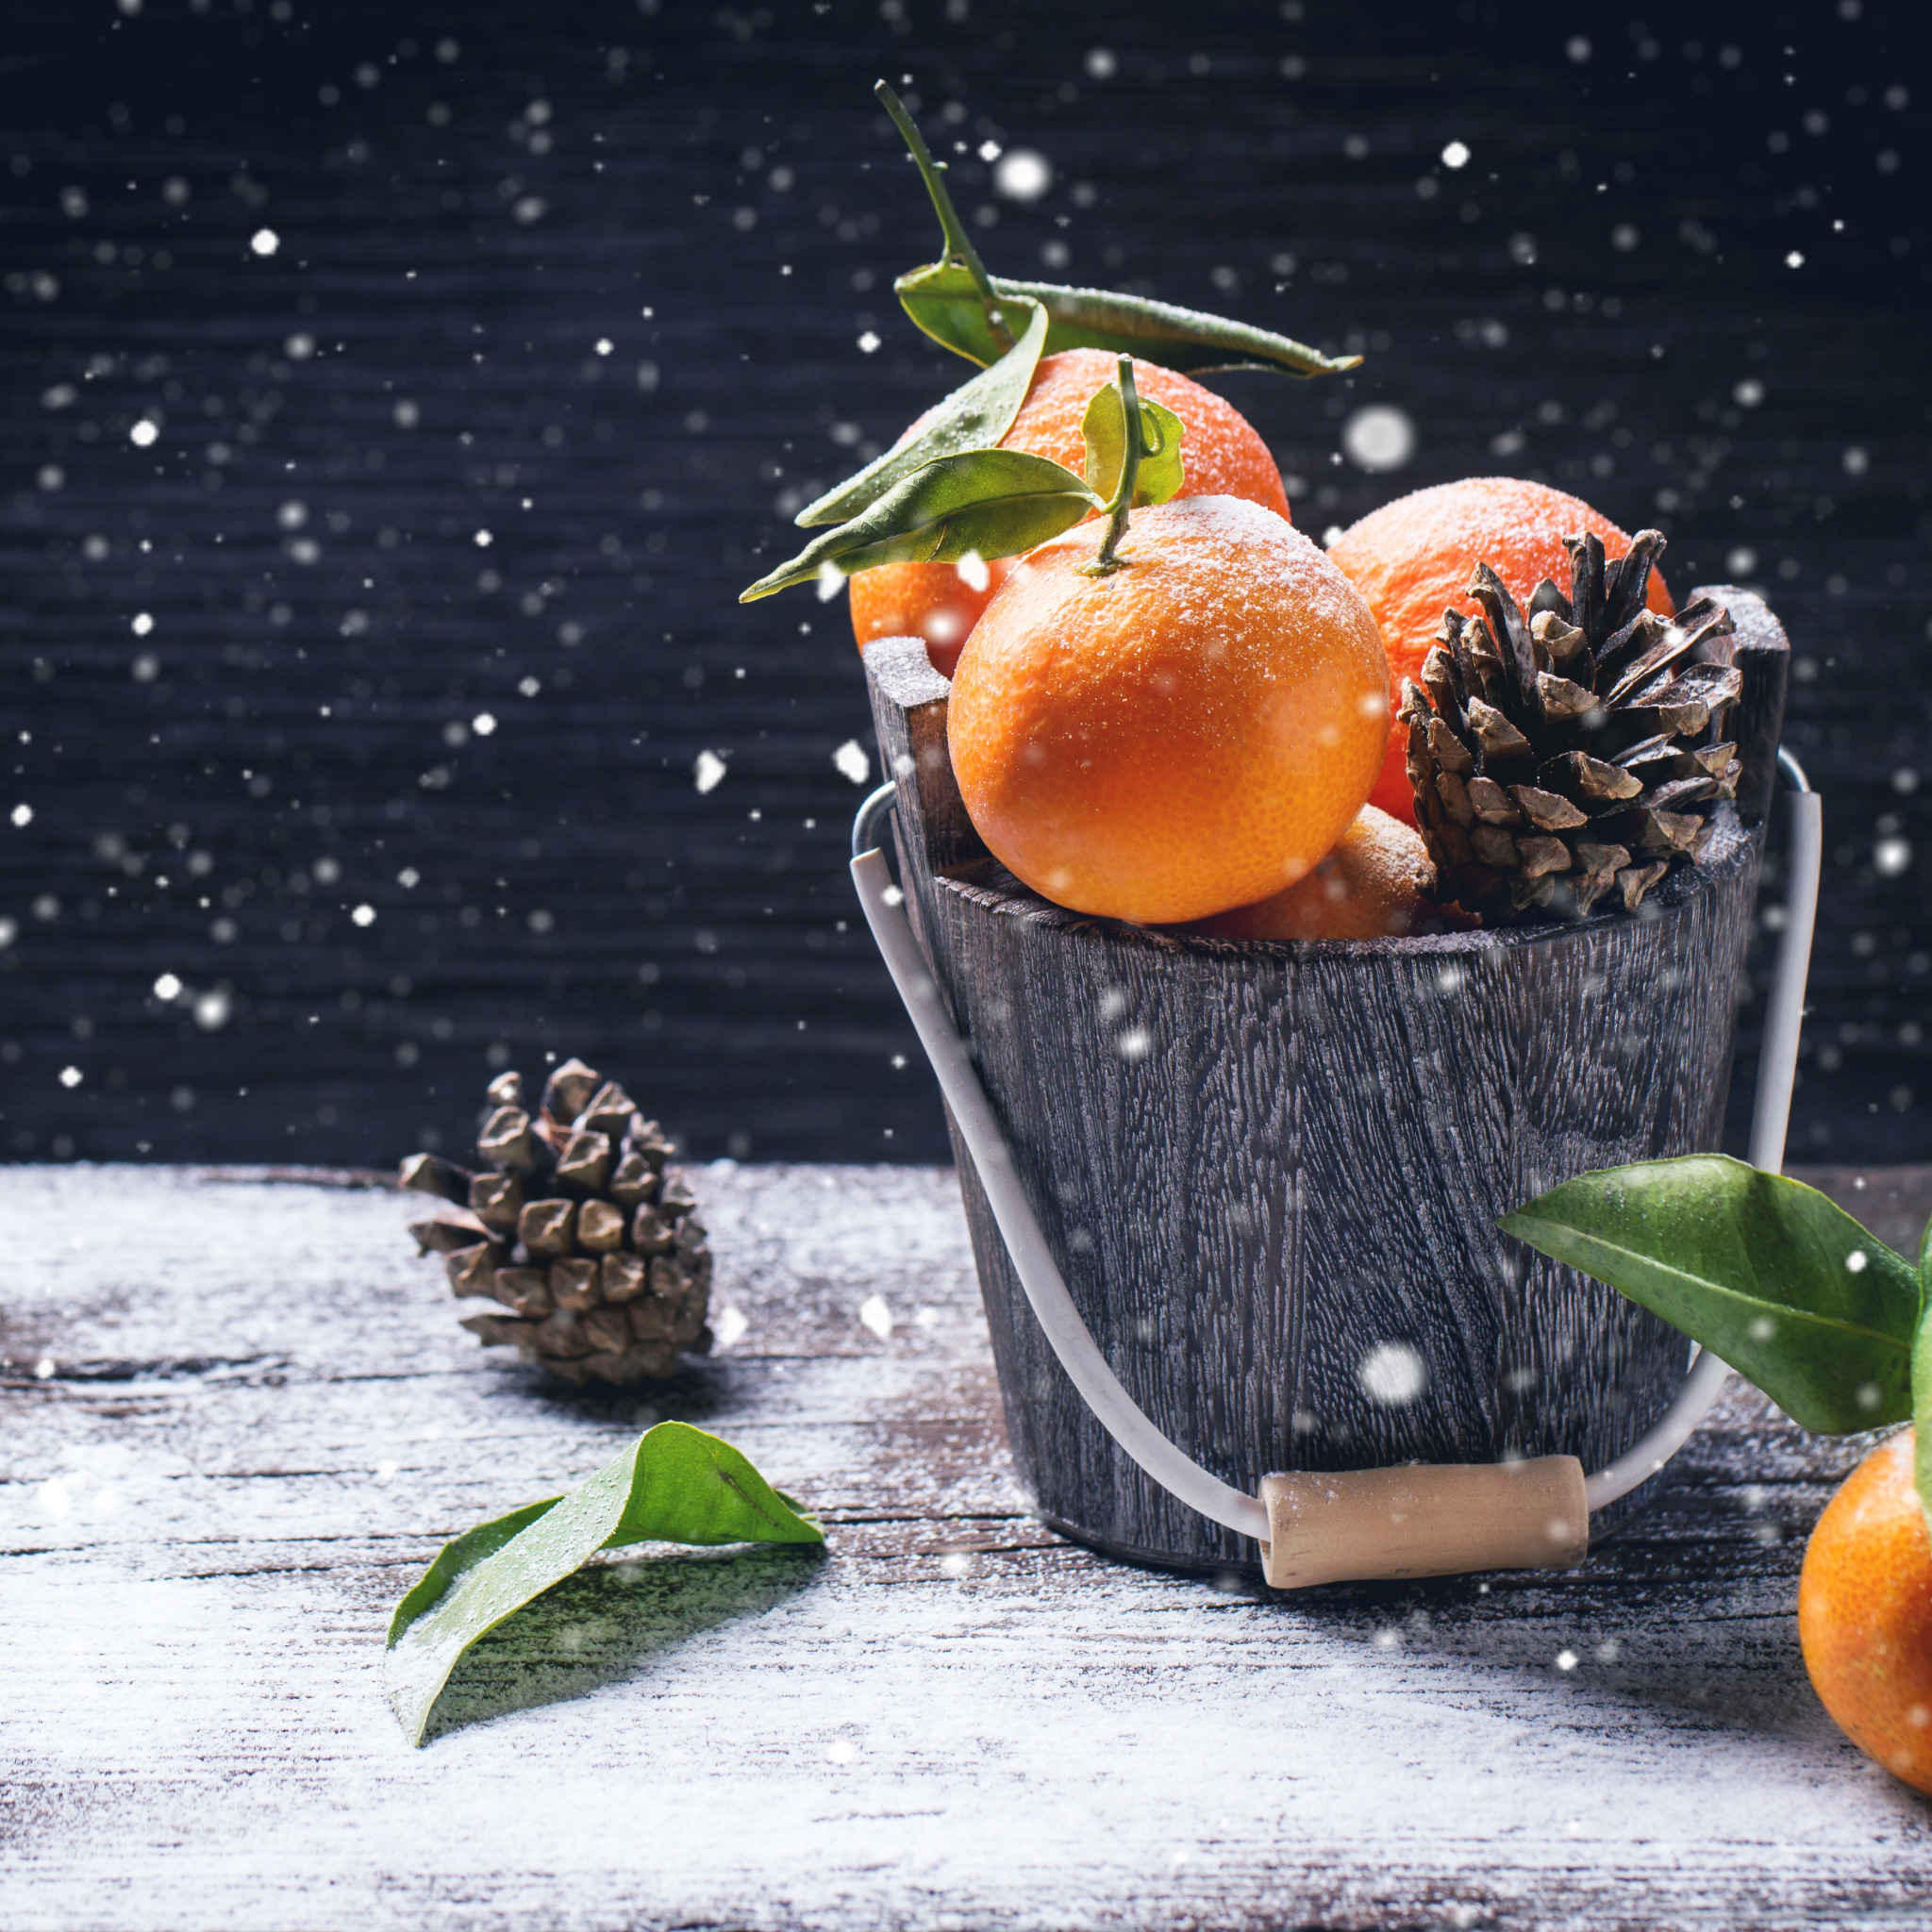 Мандарины на зиму. Зима мандарины. Мандарины новый год. Апельсины зимой. Мандарины на снегу.